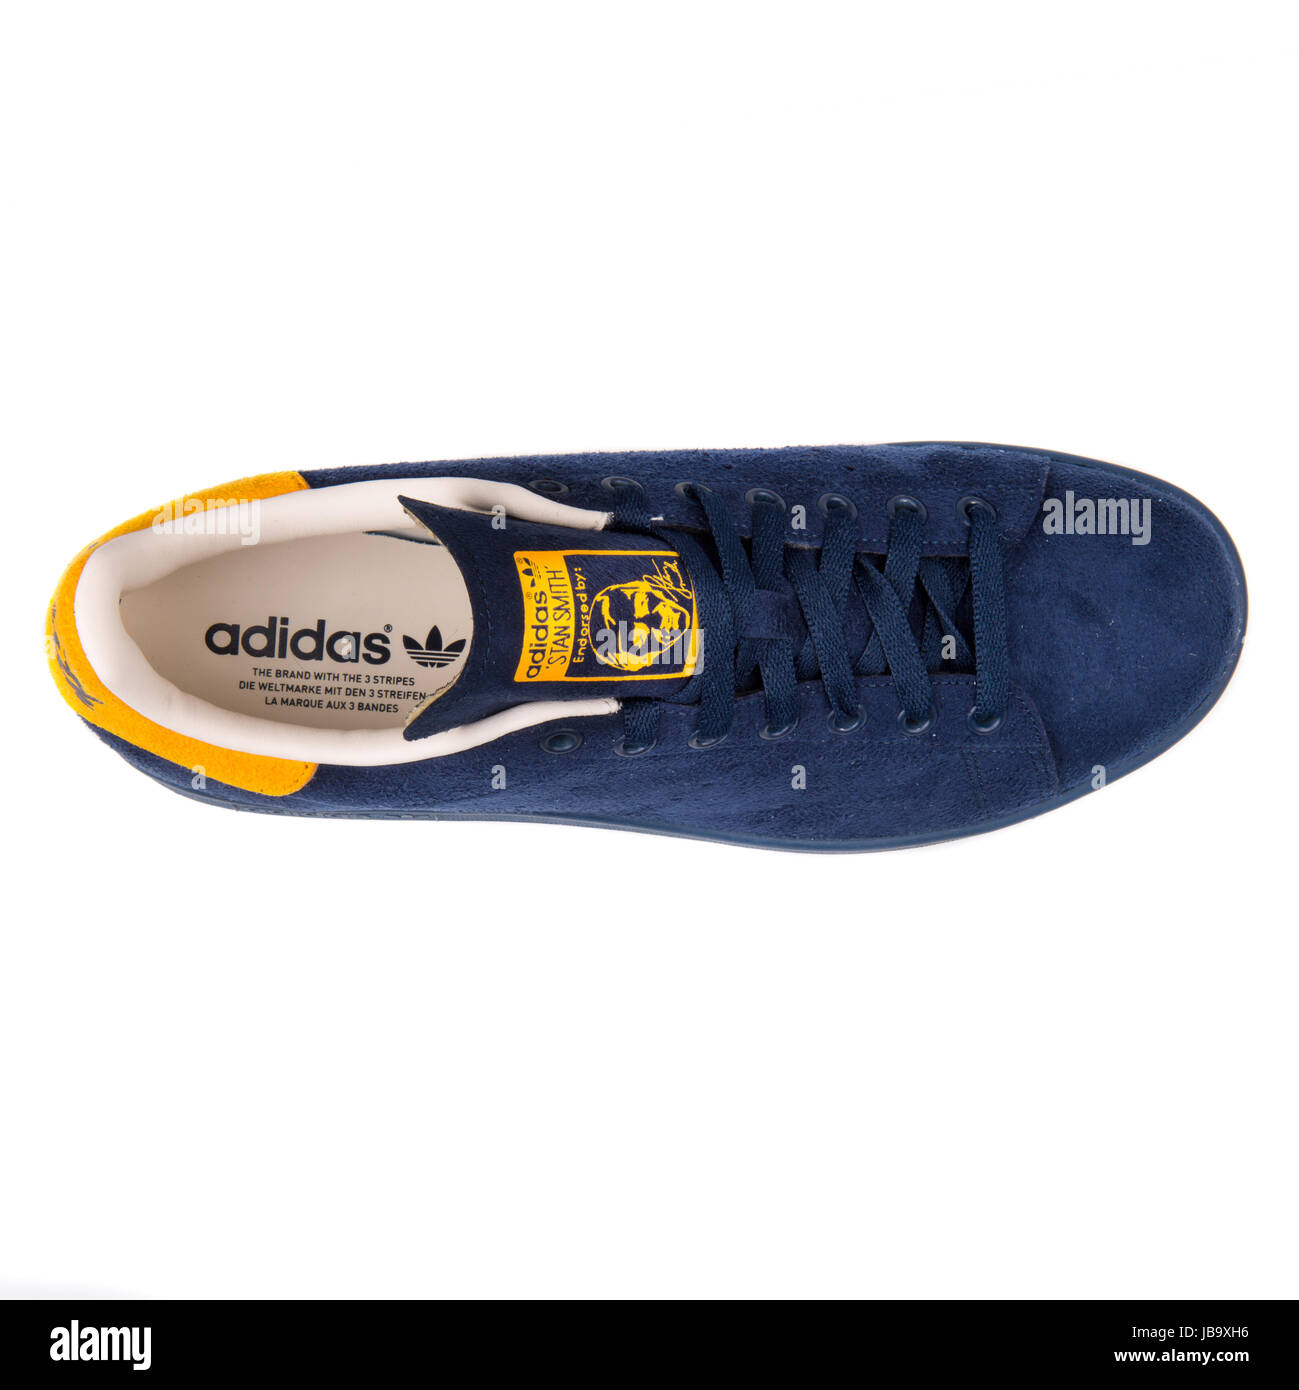 Adidas Stan azul marino amarillo zapatos deportivos - B24707 Fotografía de stock - Alamy